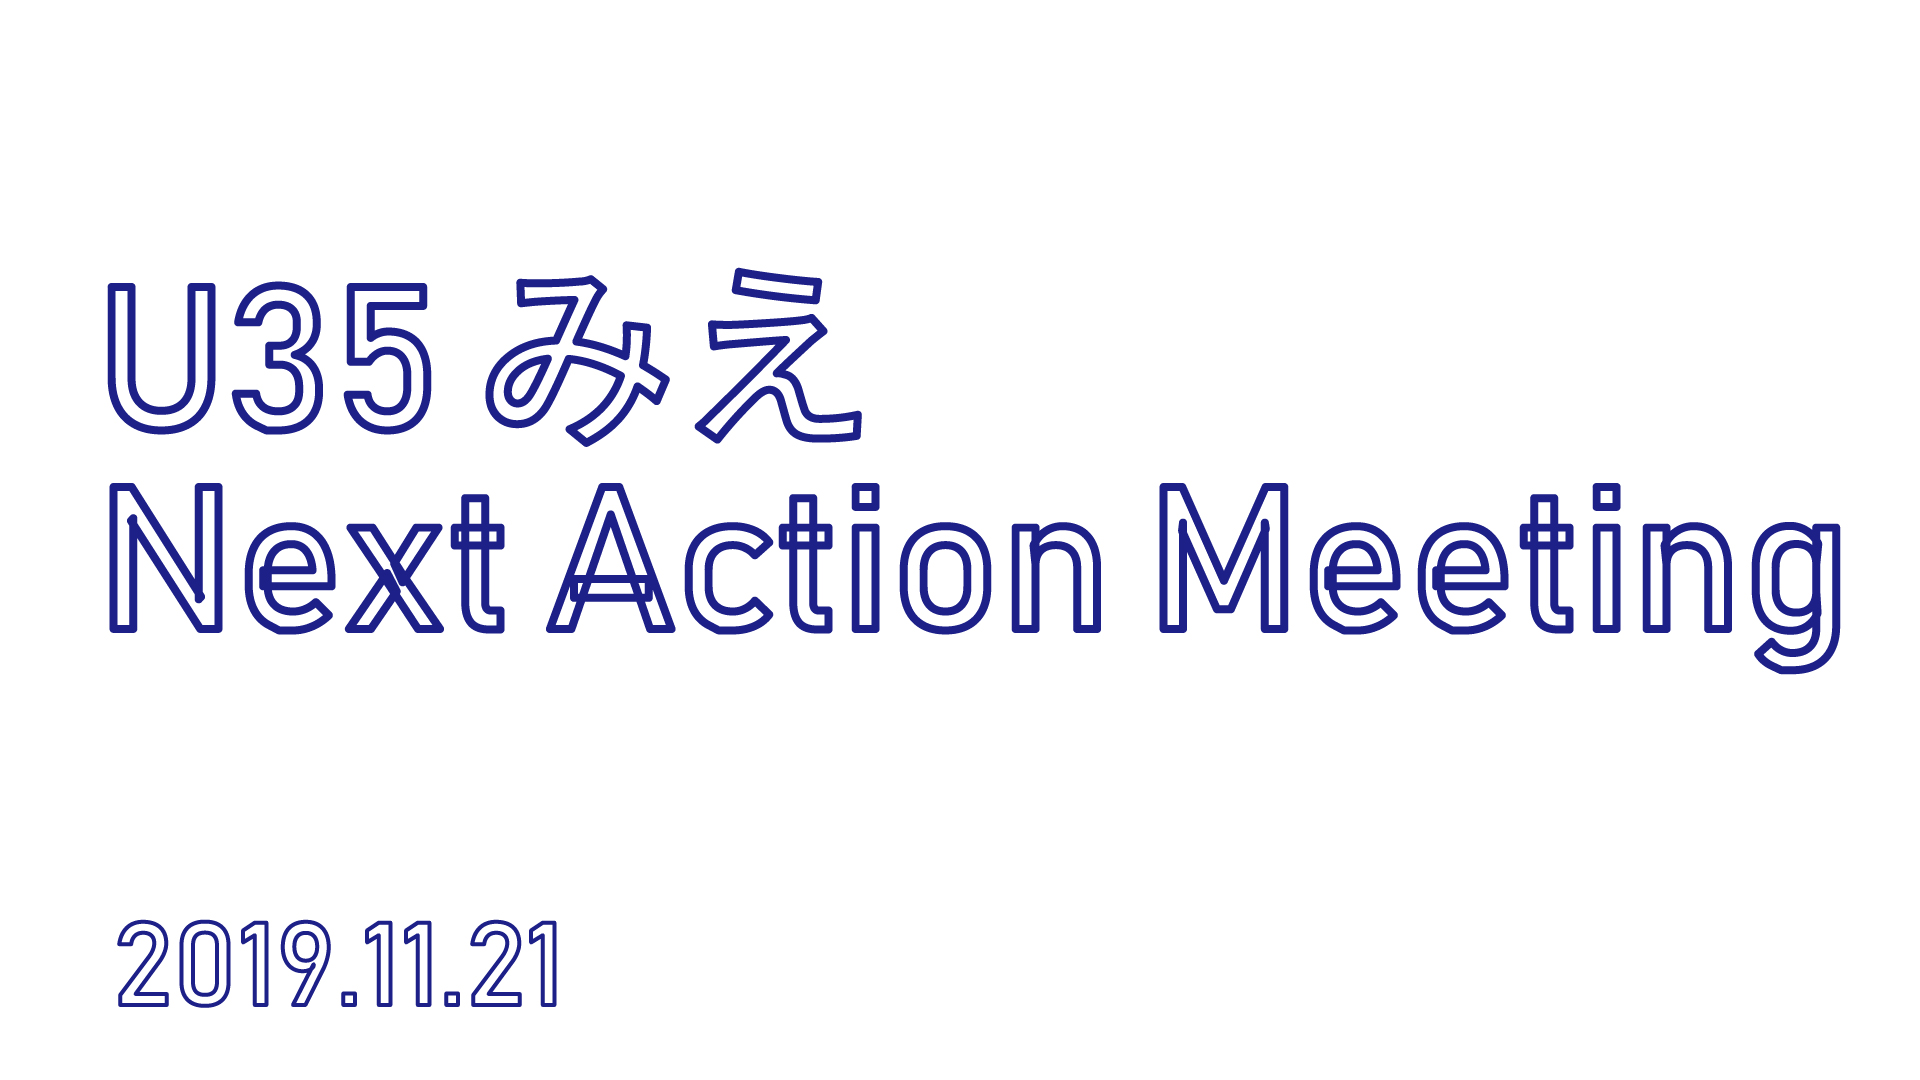 U35みえ Next Action Meeting